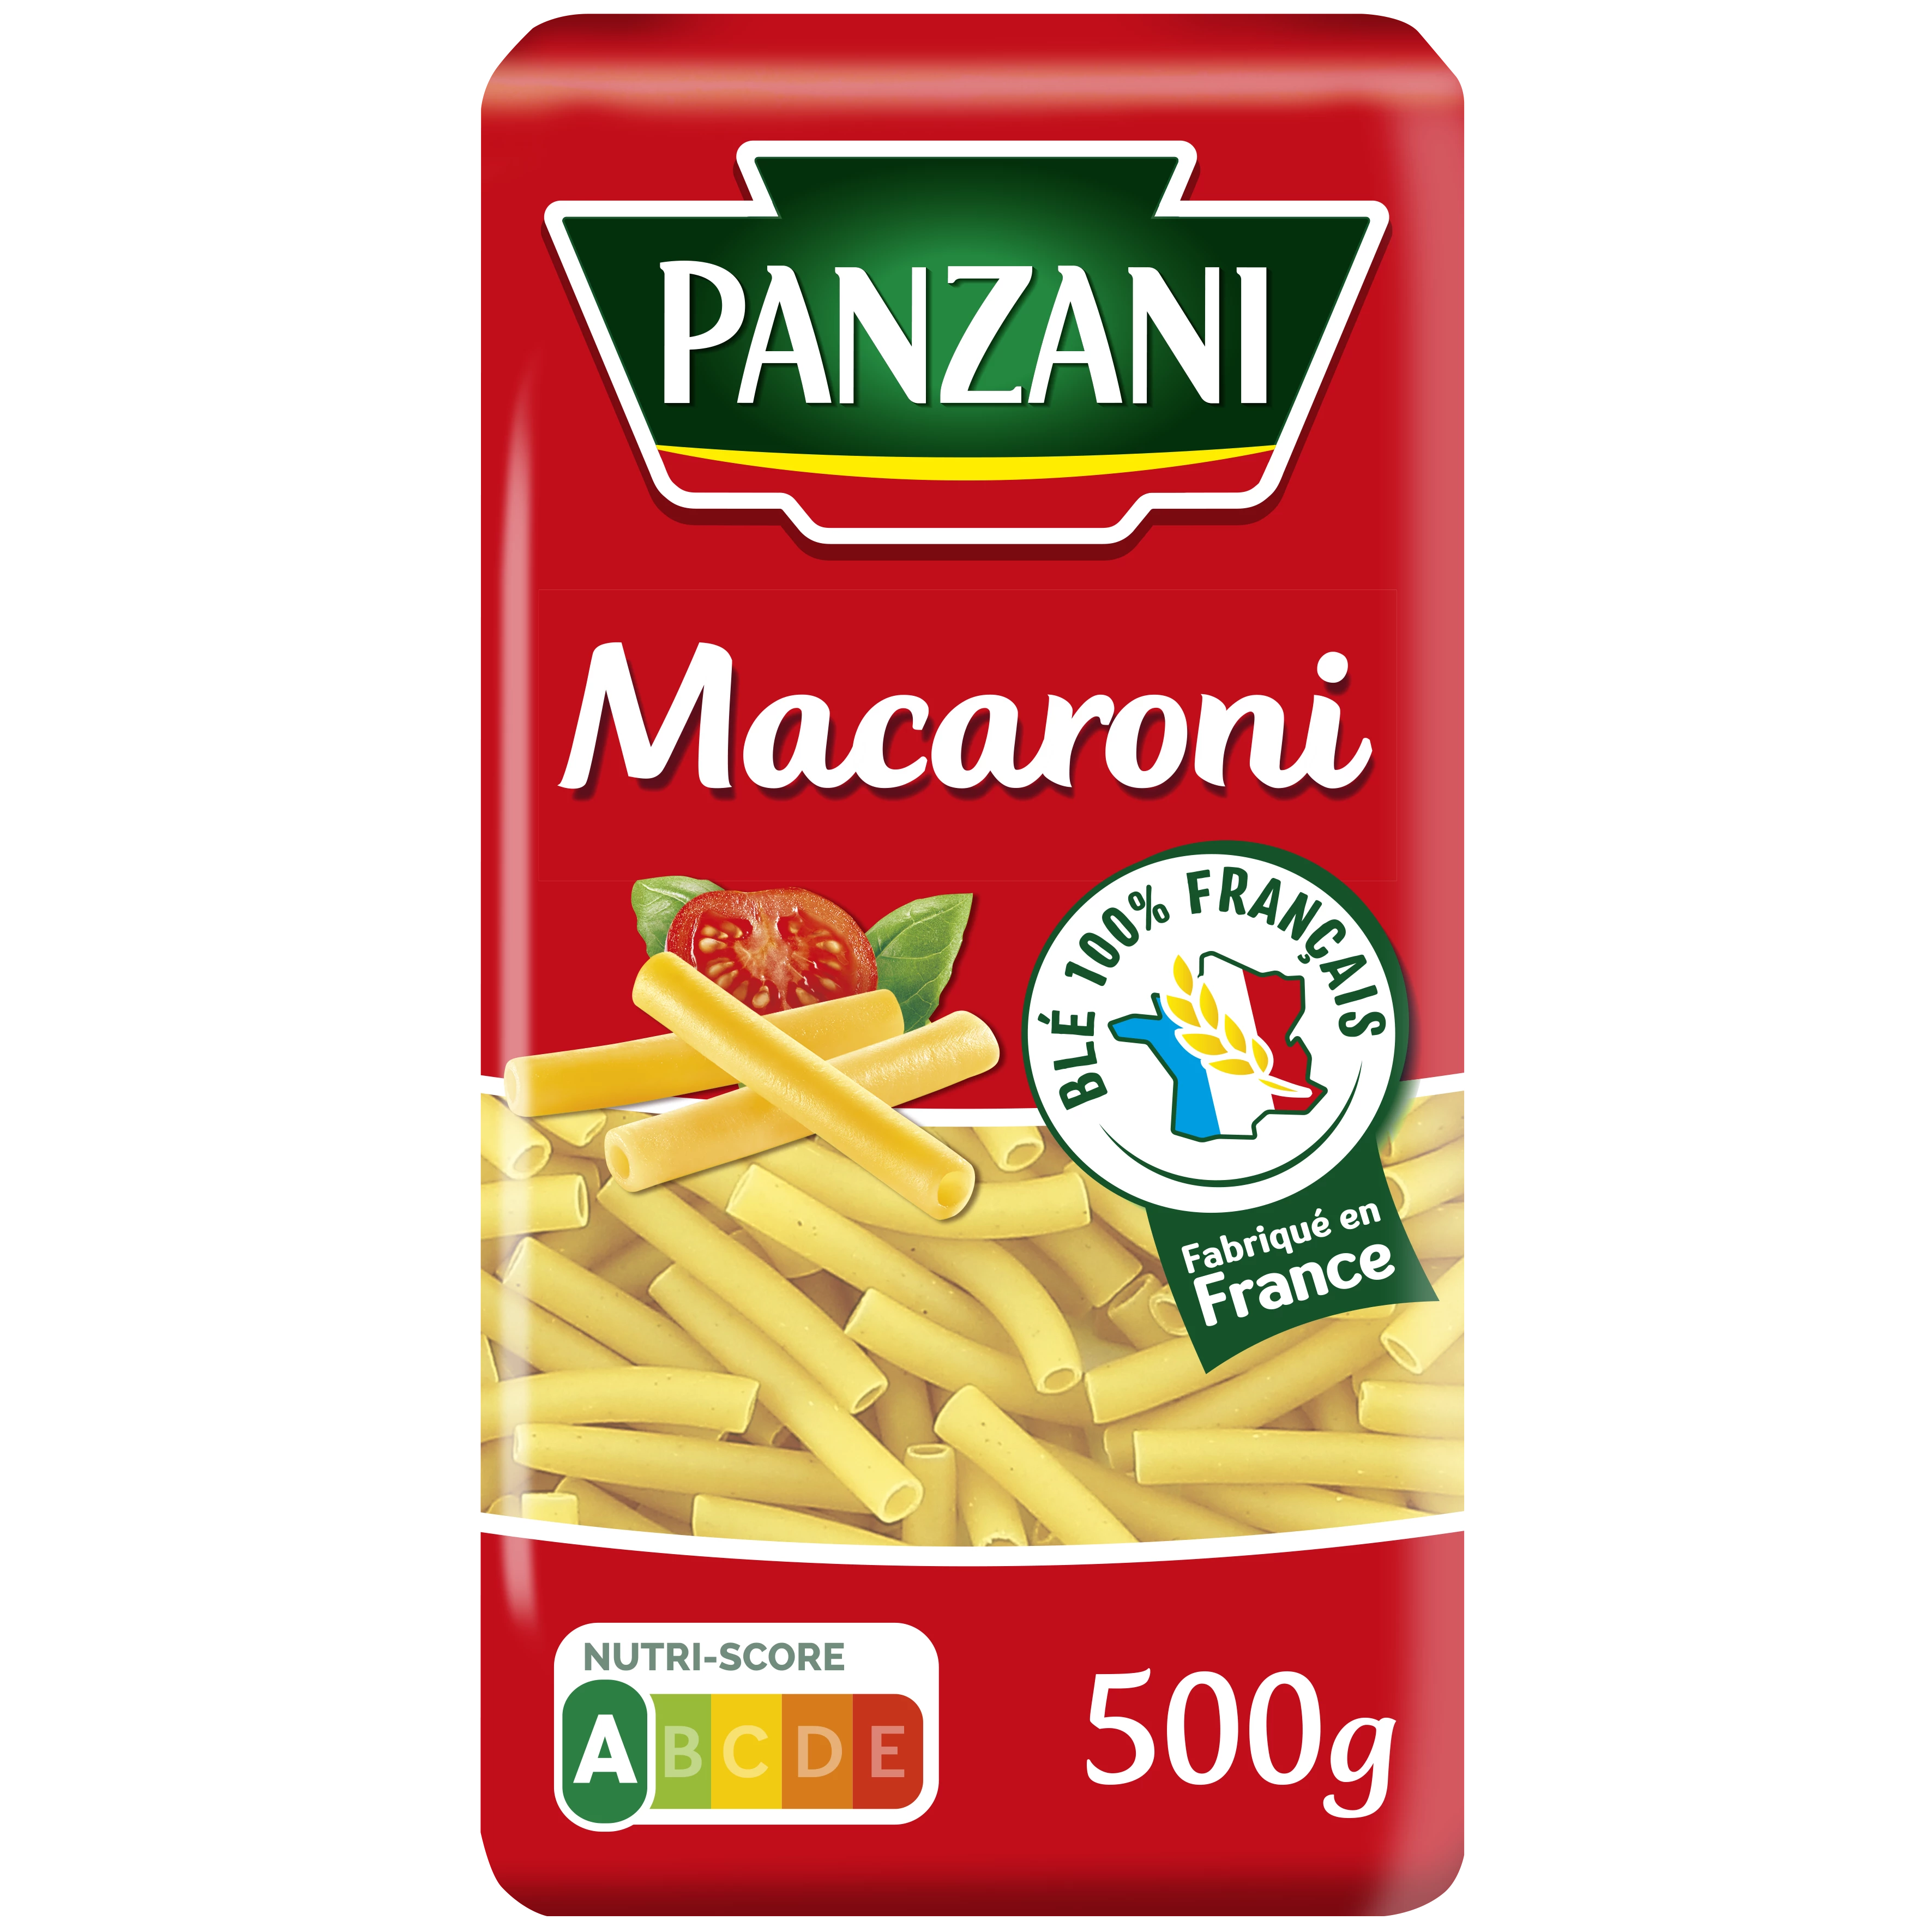 Pasta Macarrones, 500g - PANZANI